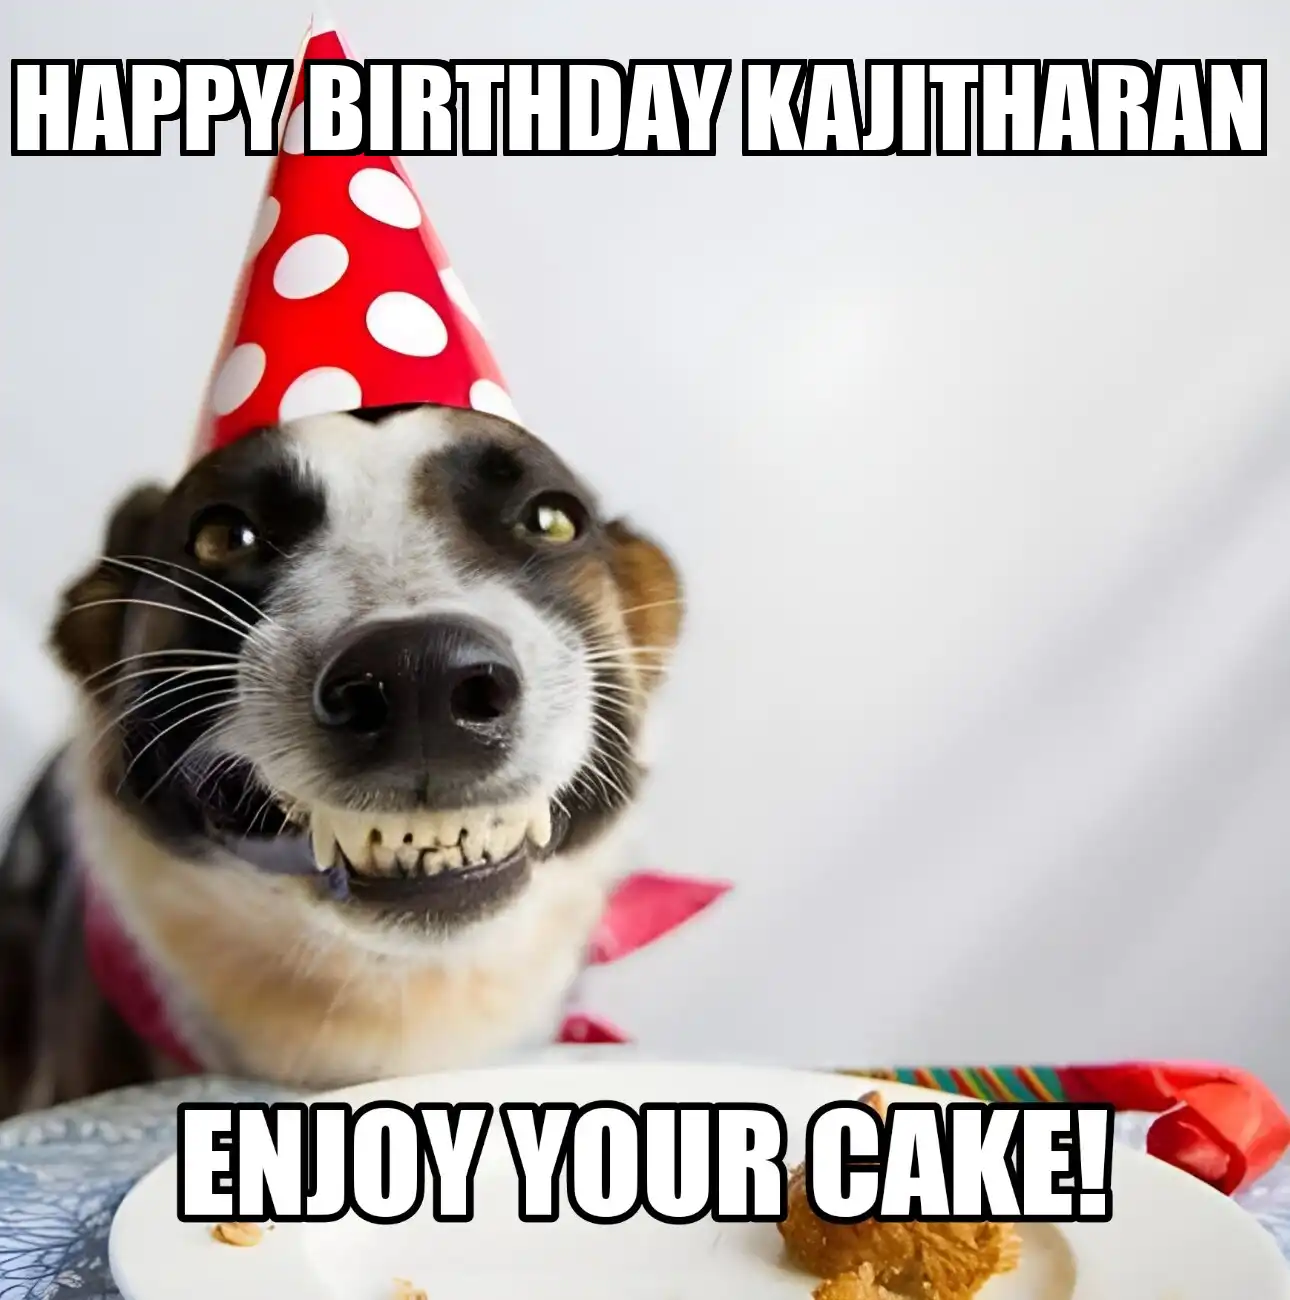 Happy Birthday Kajitharan Enjoy Your Cake Dog Meme